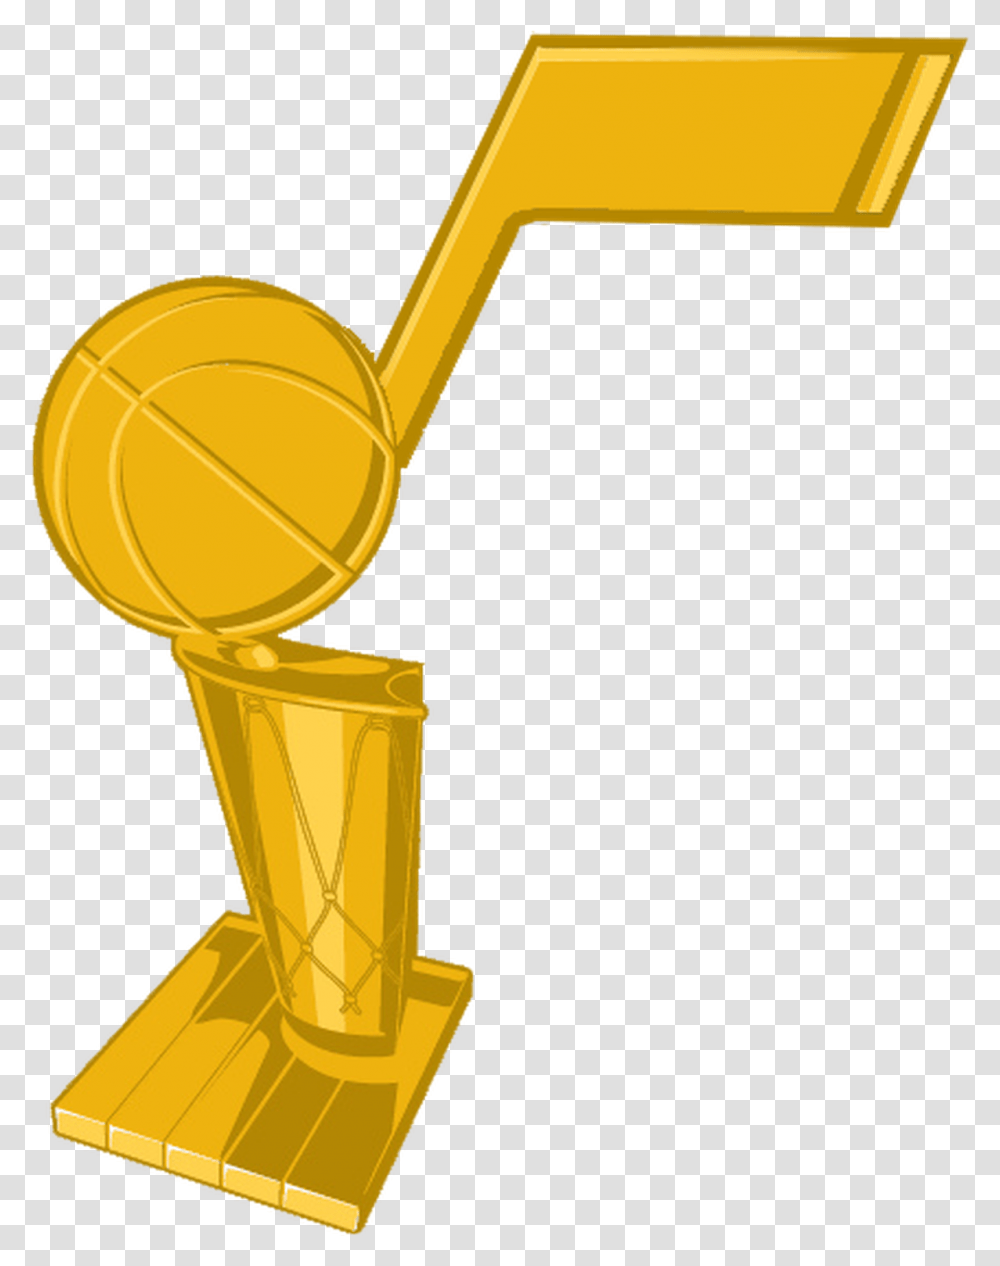 Nba Championship Trophy Logo Image Logo The Finals Nba Transparent Png